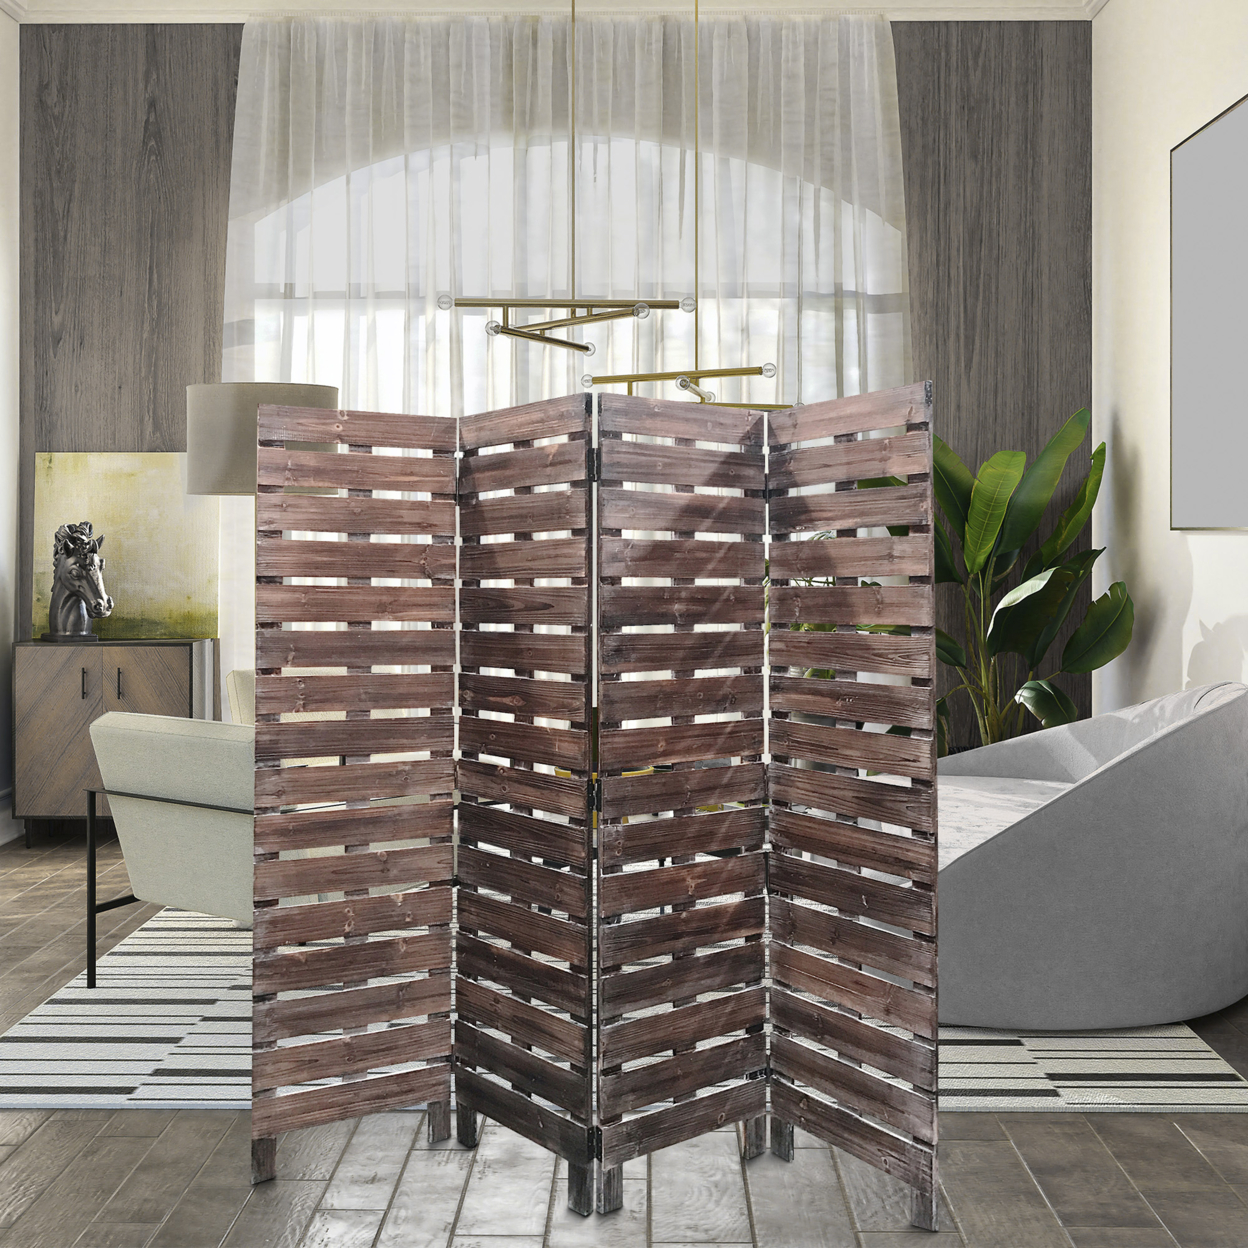 4 Panel Wooden Room Divider With Horizontal Planks, Brown- Saltoro Sherpi